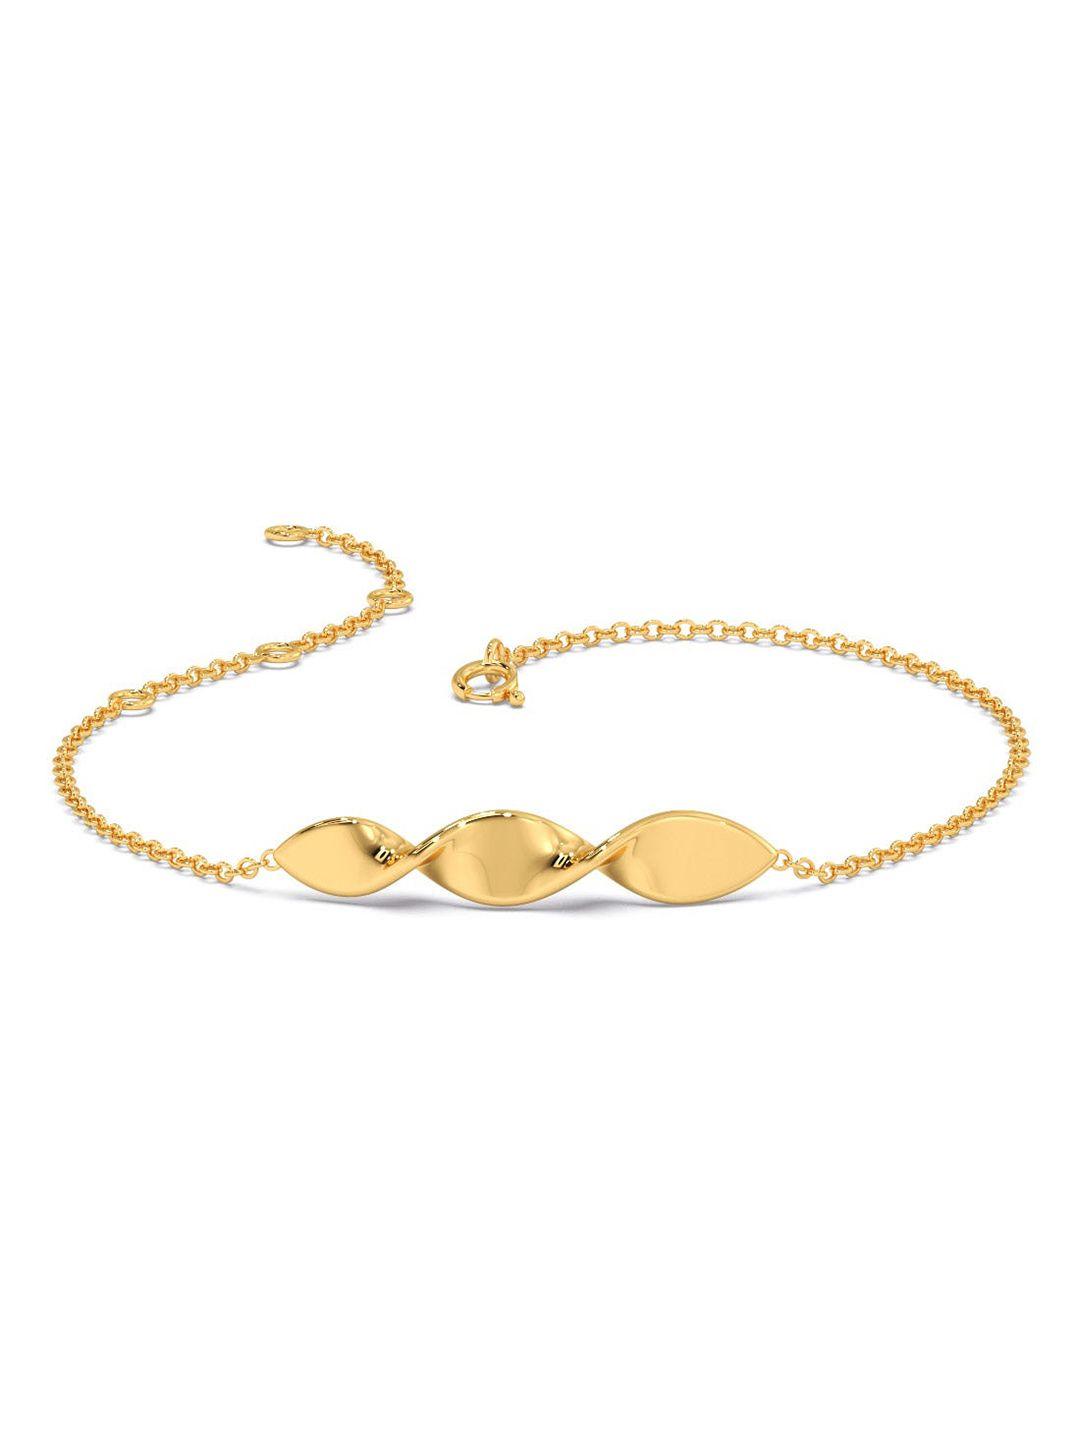 candere a kalyan jewellers company 14kt bis hallmark gold bracelet-1.46 gm